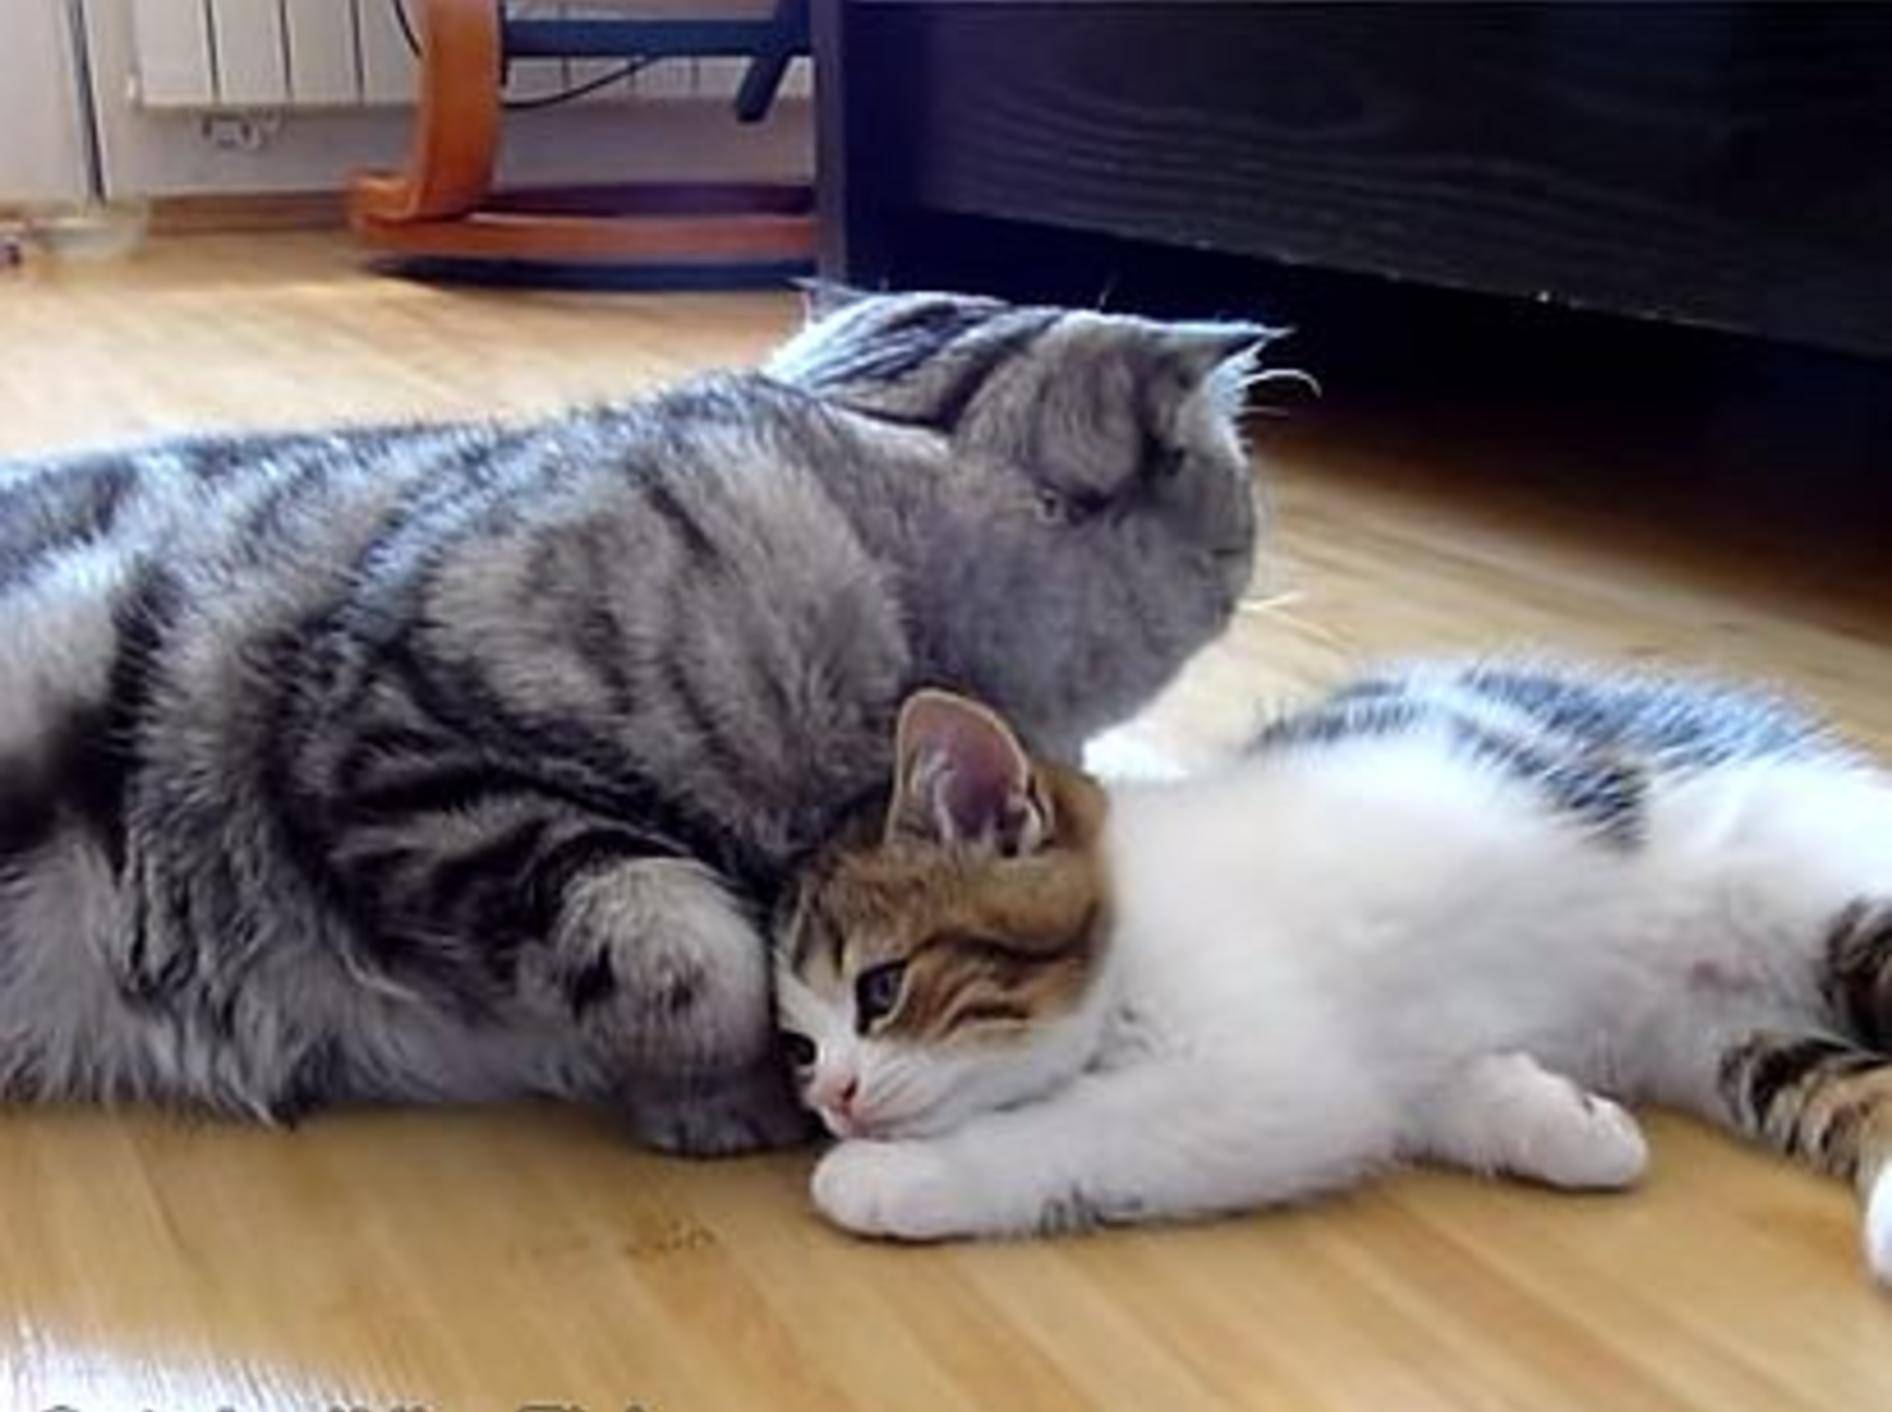 Bezauberndes Katzenbaby: "Hey, beachte mich doch Mal!" – Bild: Youtube / Funnycatsandnicefish